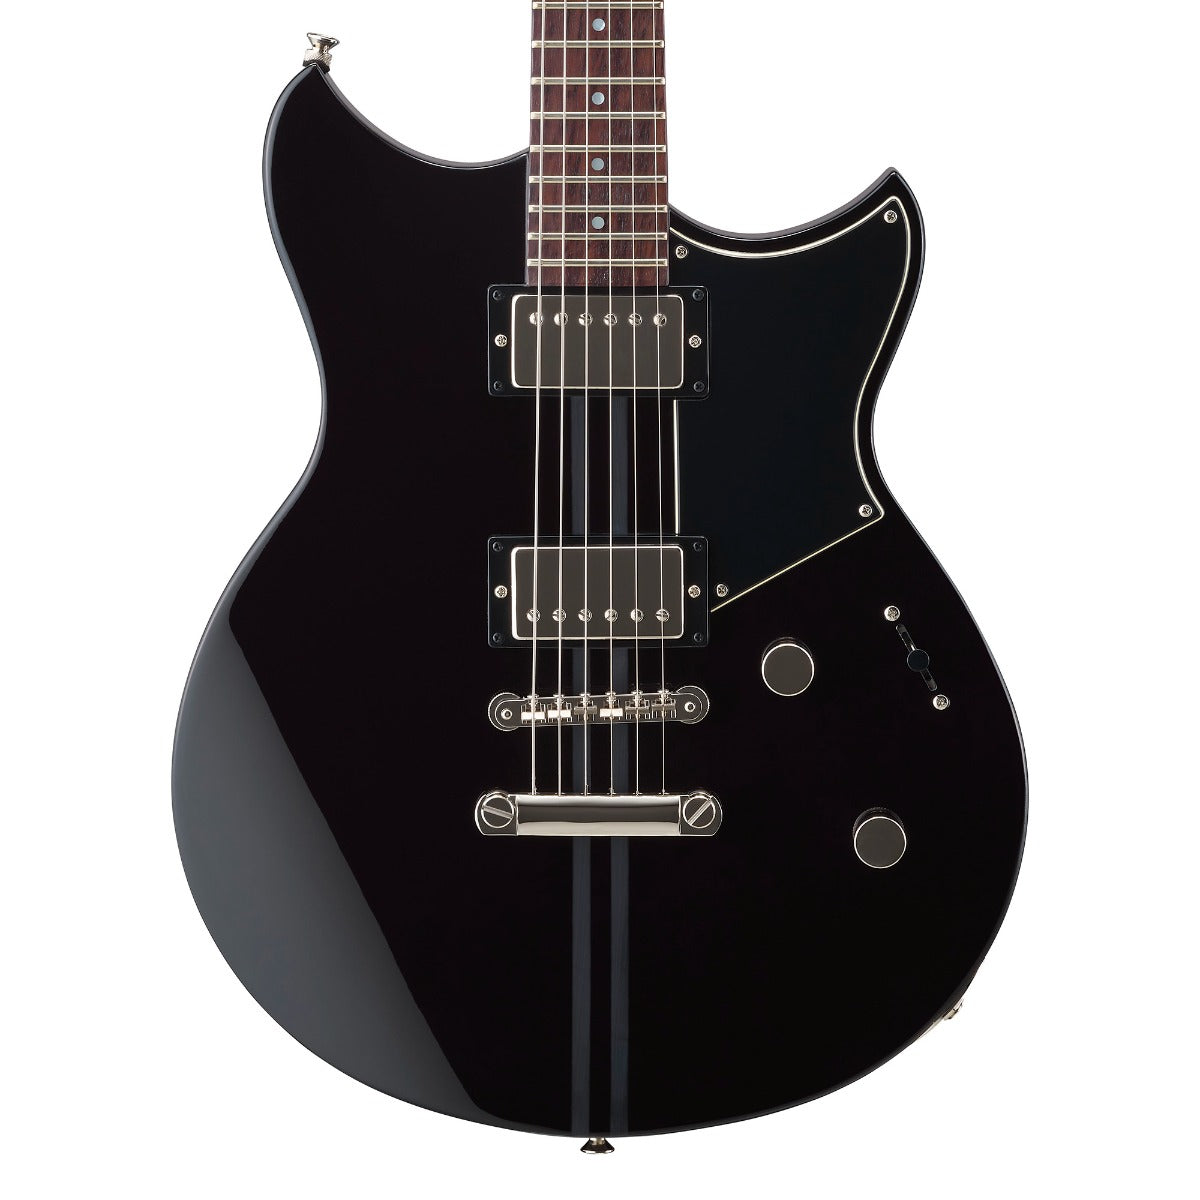 Yamaha RSE20 Revstar Element Electric Guitar - Black, View 1